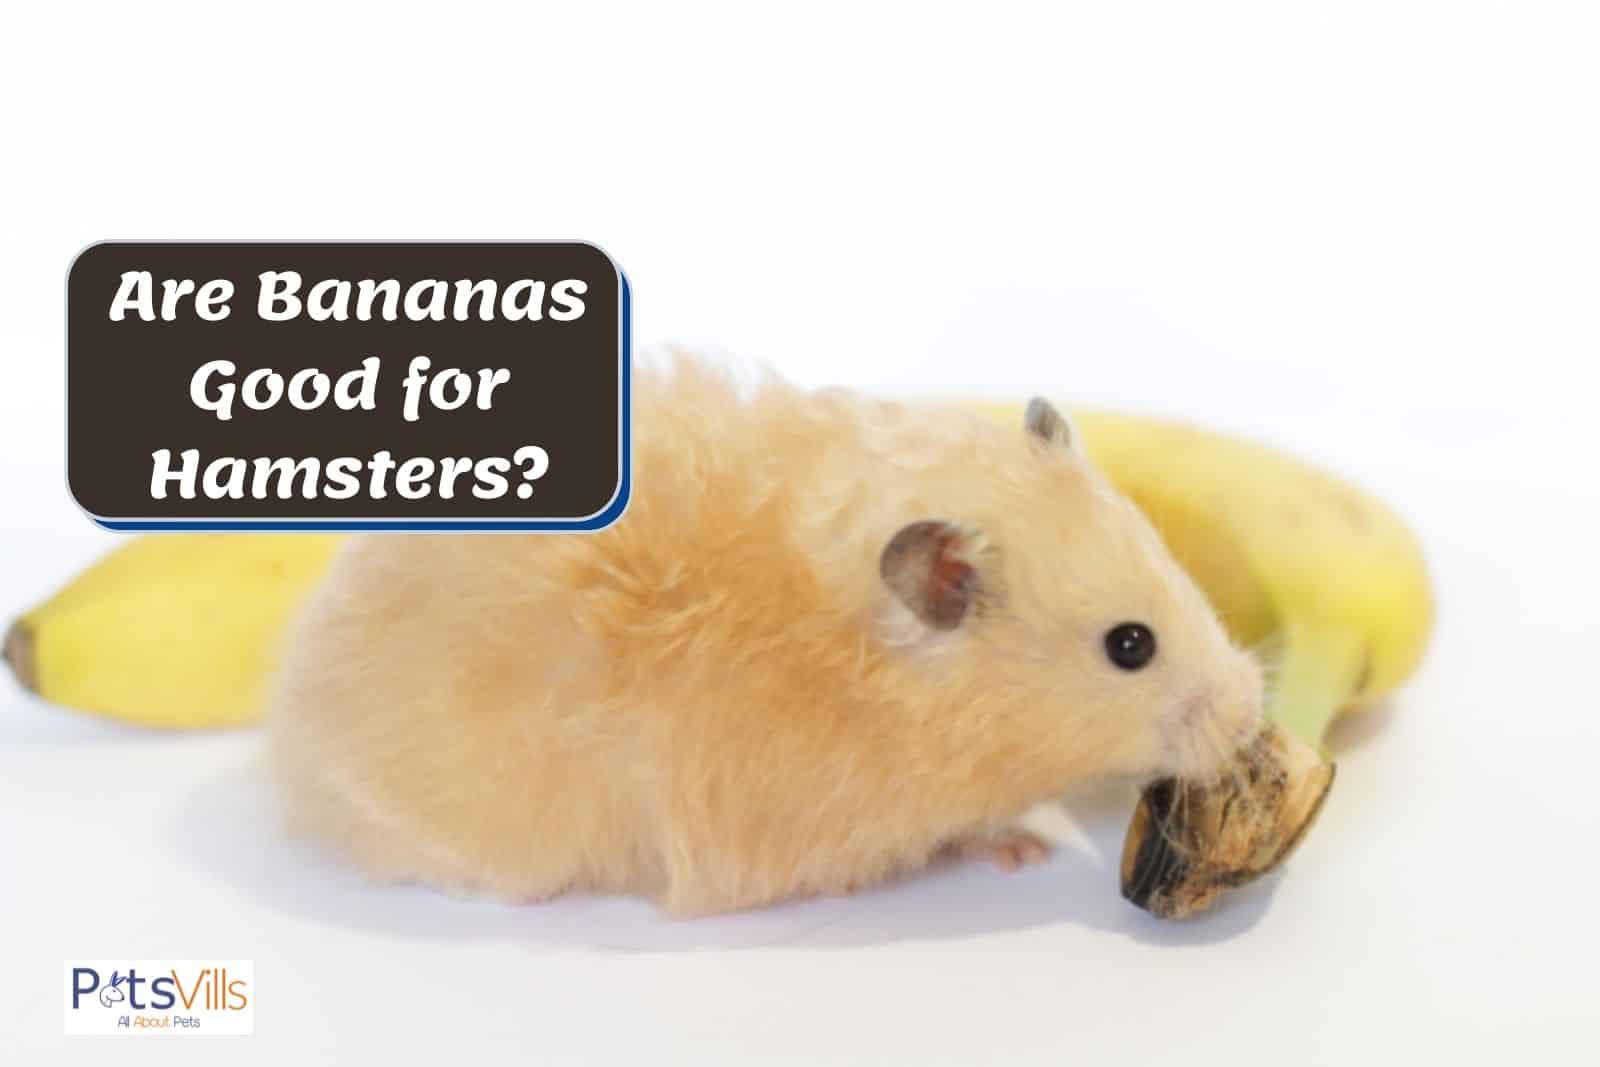 a hamster is eating banana, can hamsters eat bananas